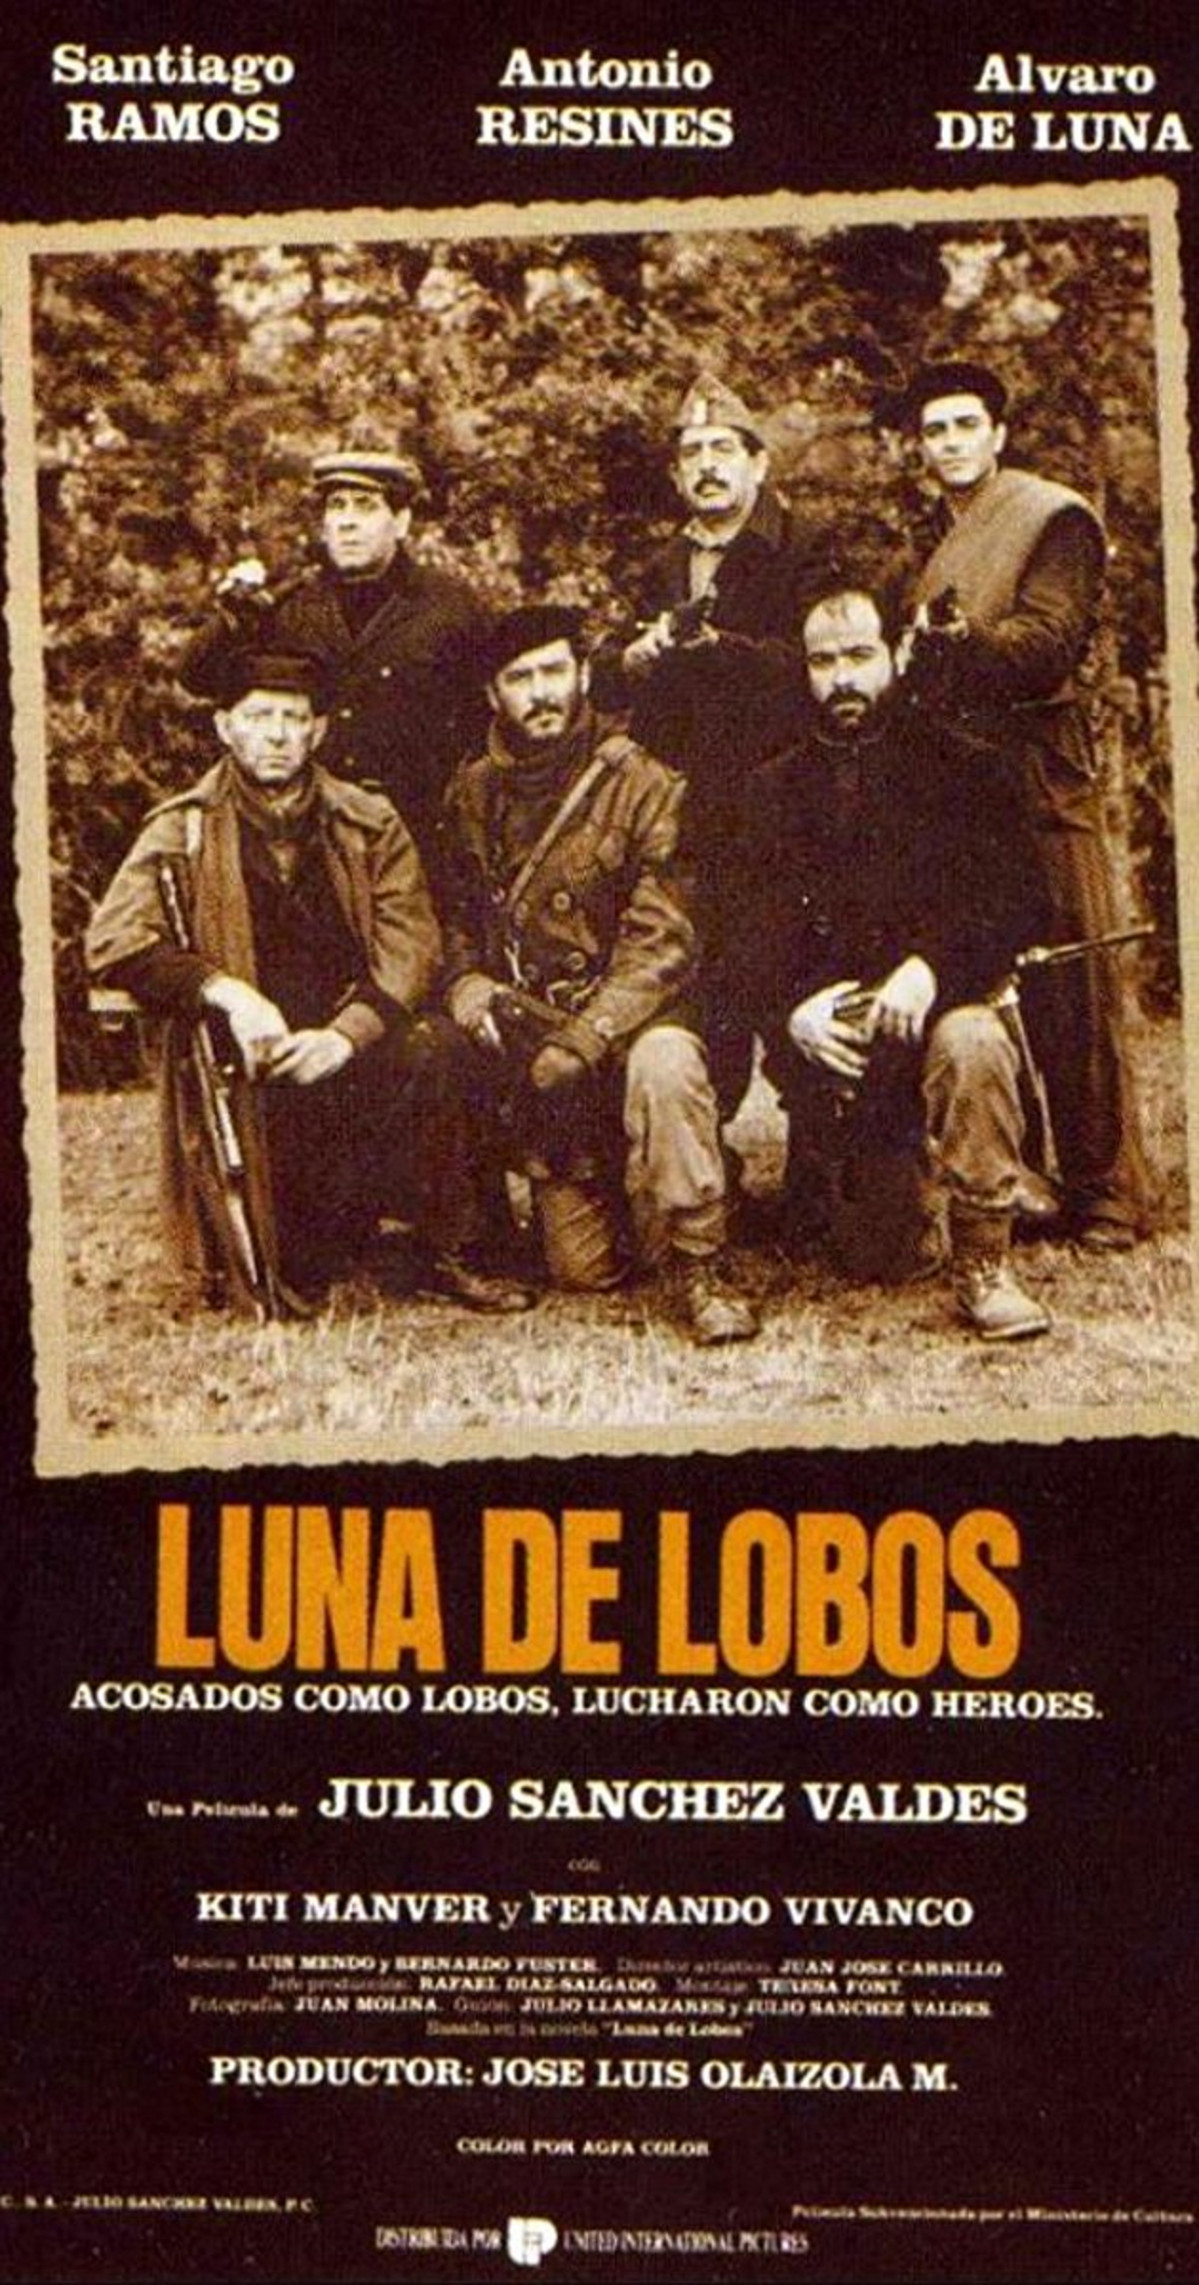 Luna de lobos Julio Sau0301nchez Valdeu0301s 1987 poster